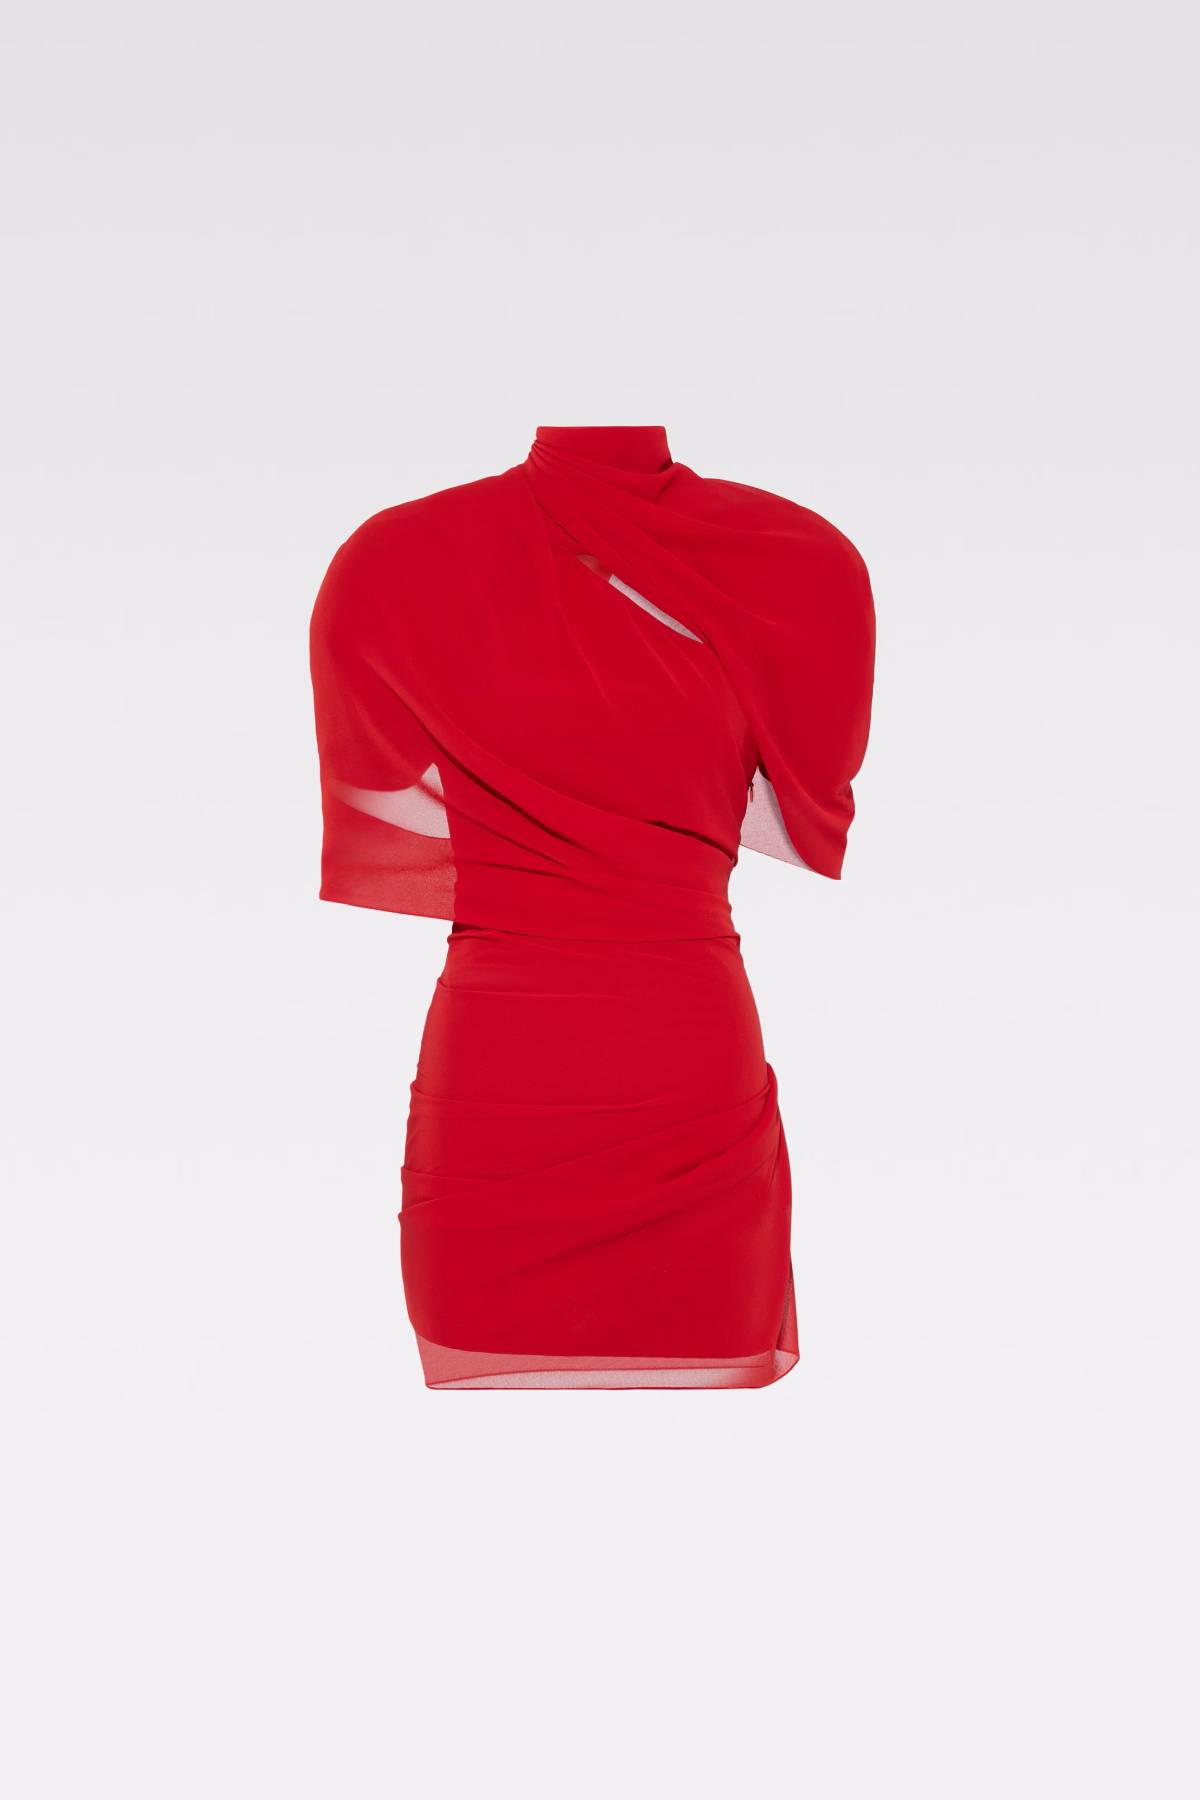 Little Red Dress od Jacquemusa (Fot. Materiały prasowe)